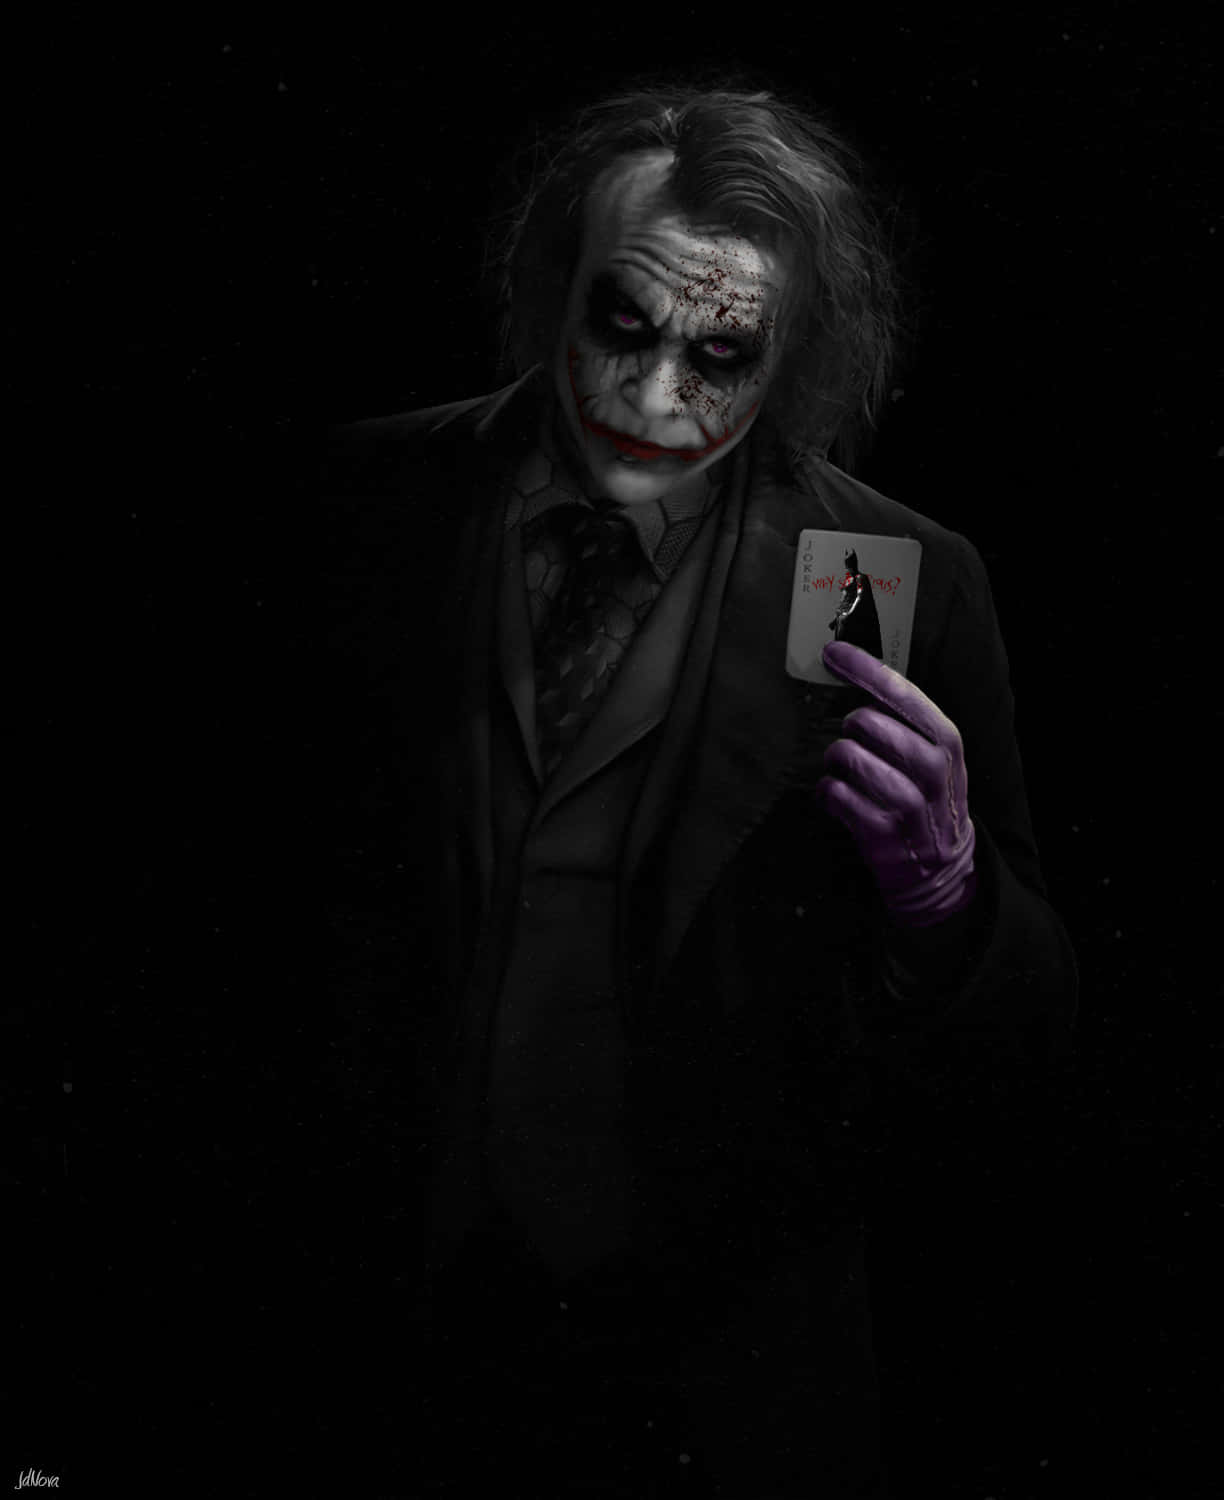 “The Joker spreading chaos and mayhem”